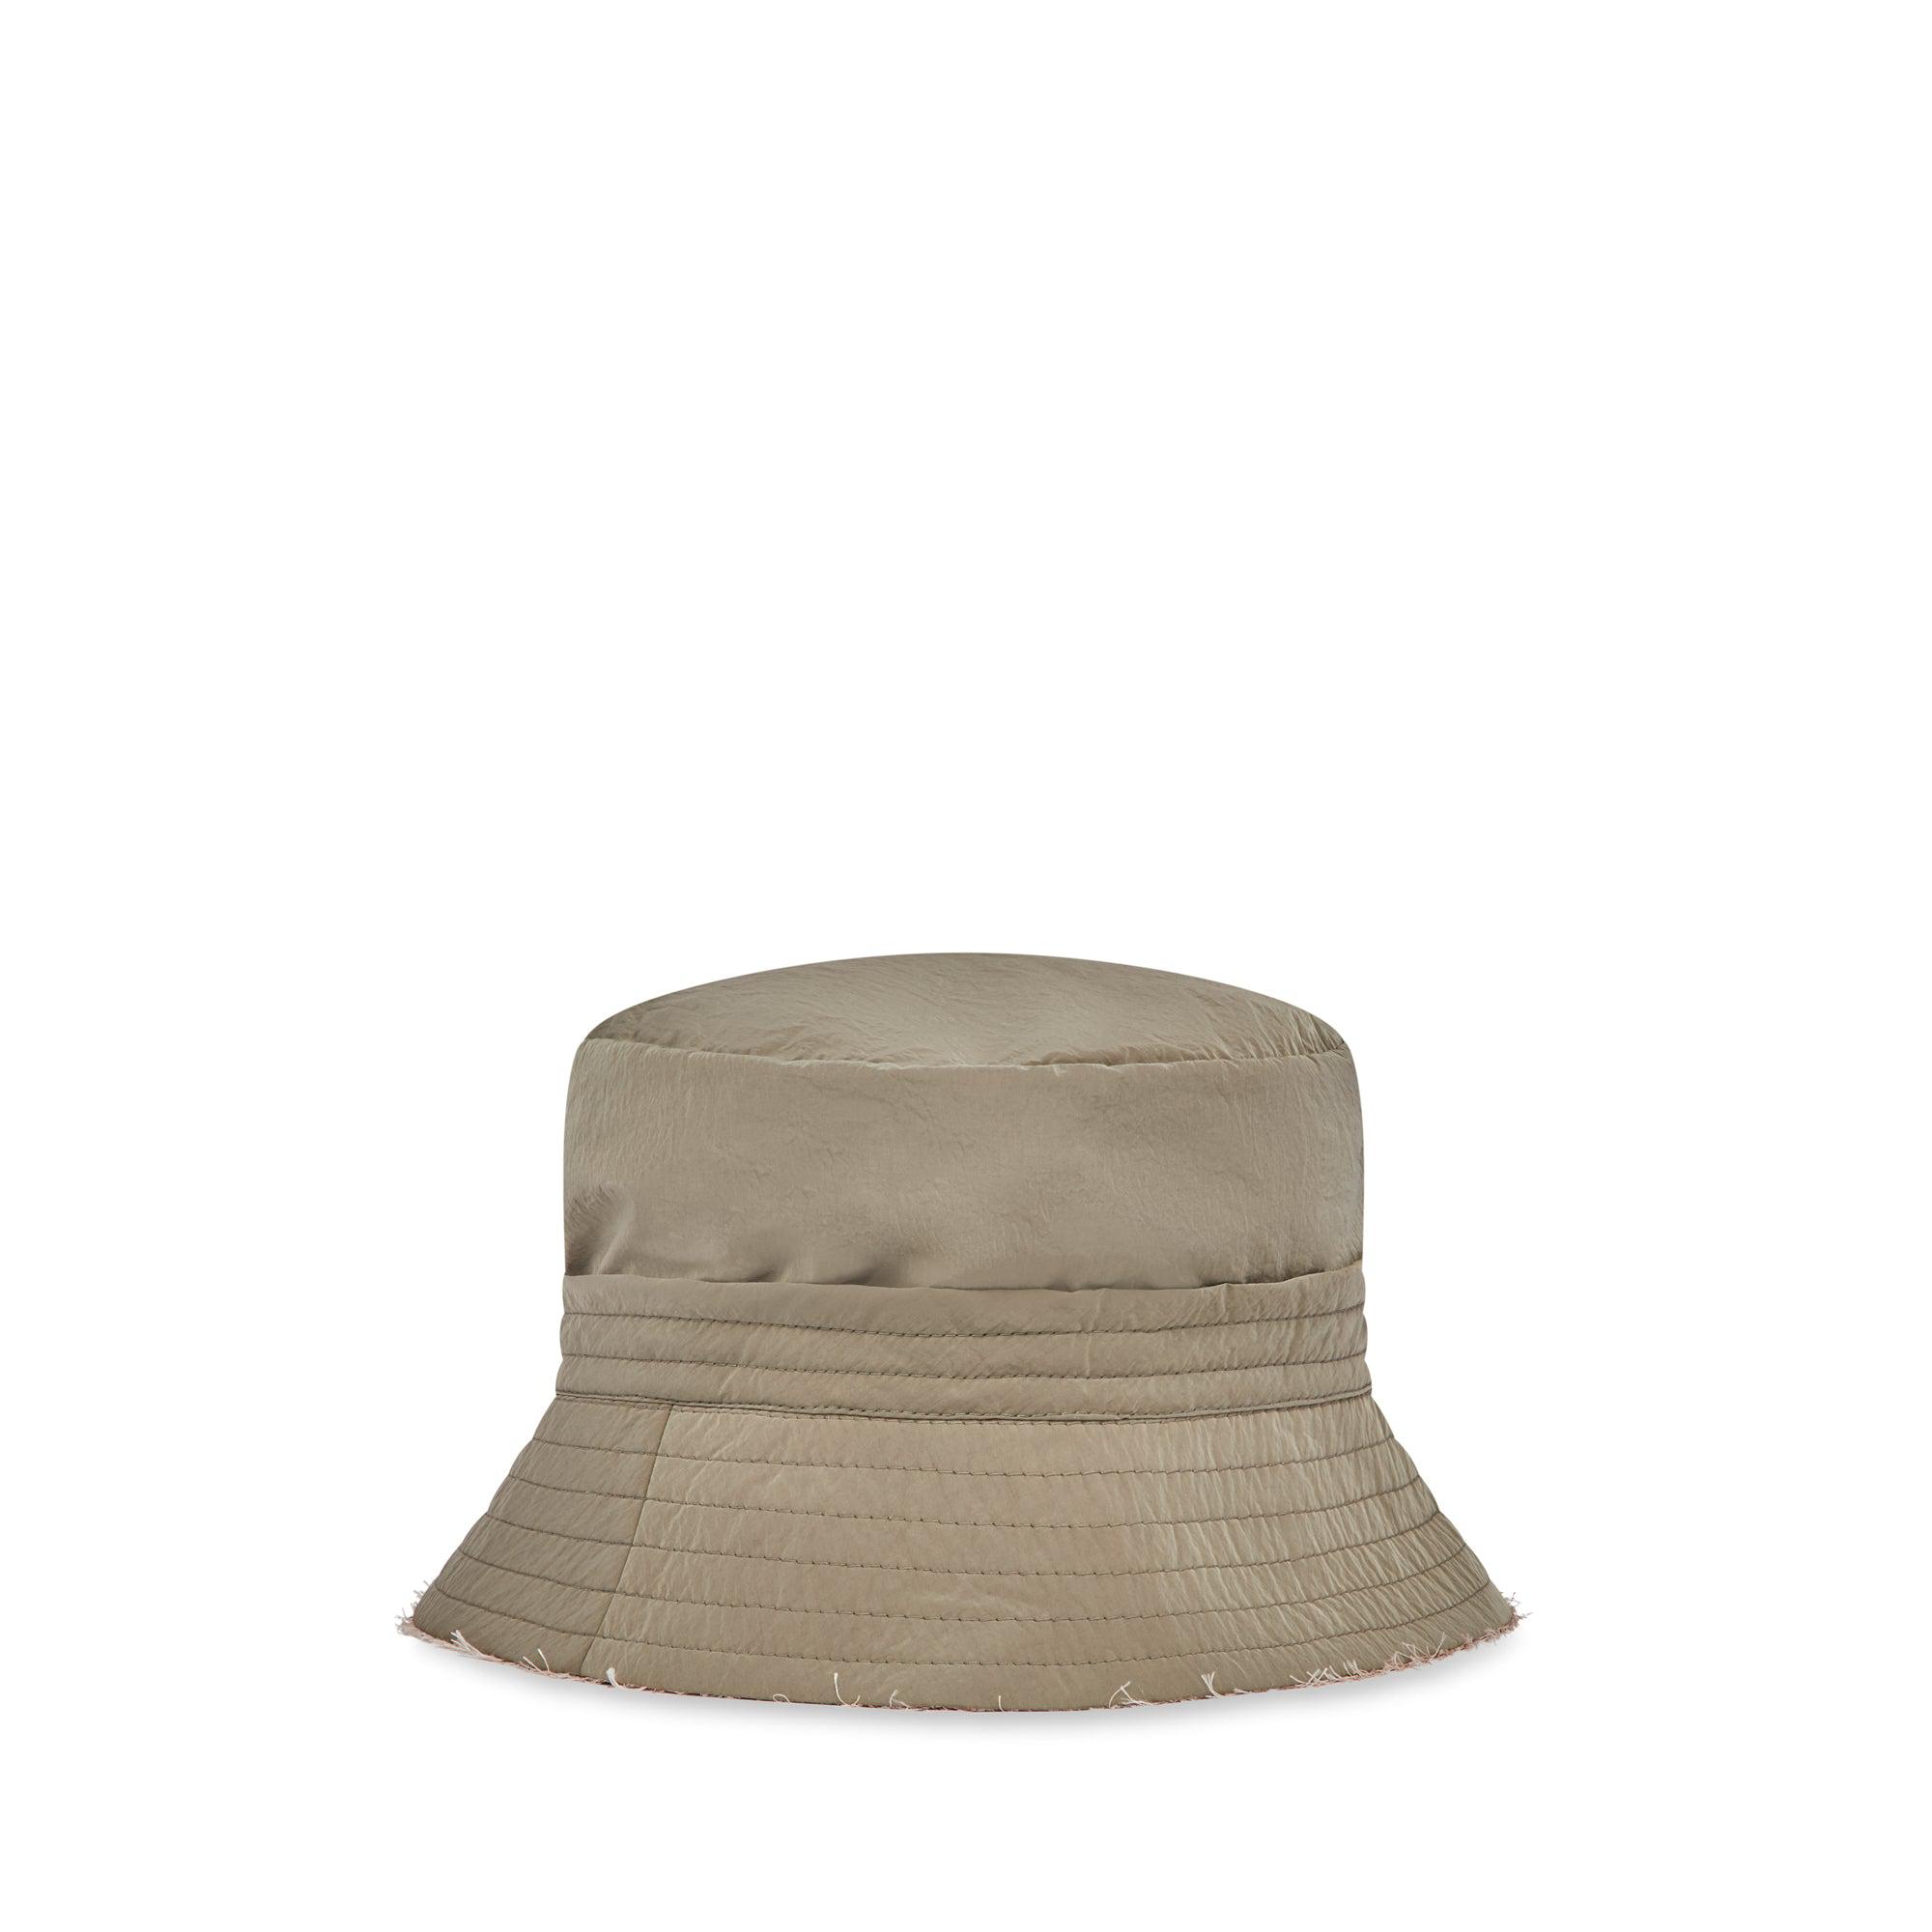 Craig Green Men's Reversible Bucket Hat (Pink/Grey) by CRAIG GREEN